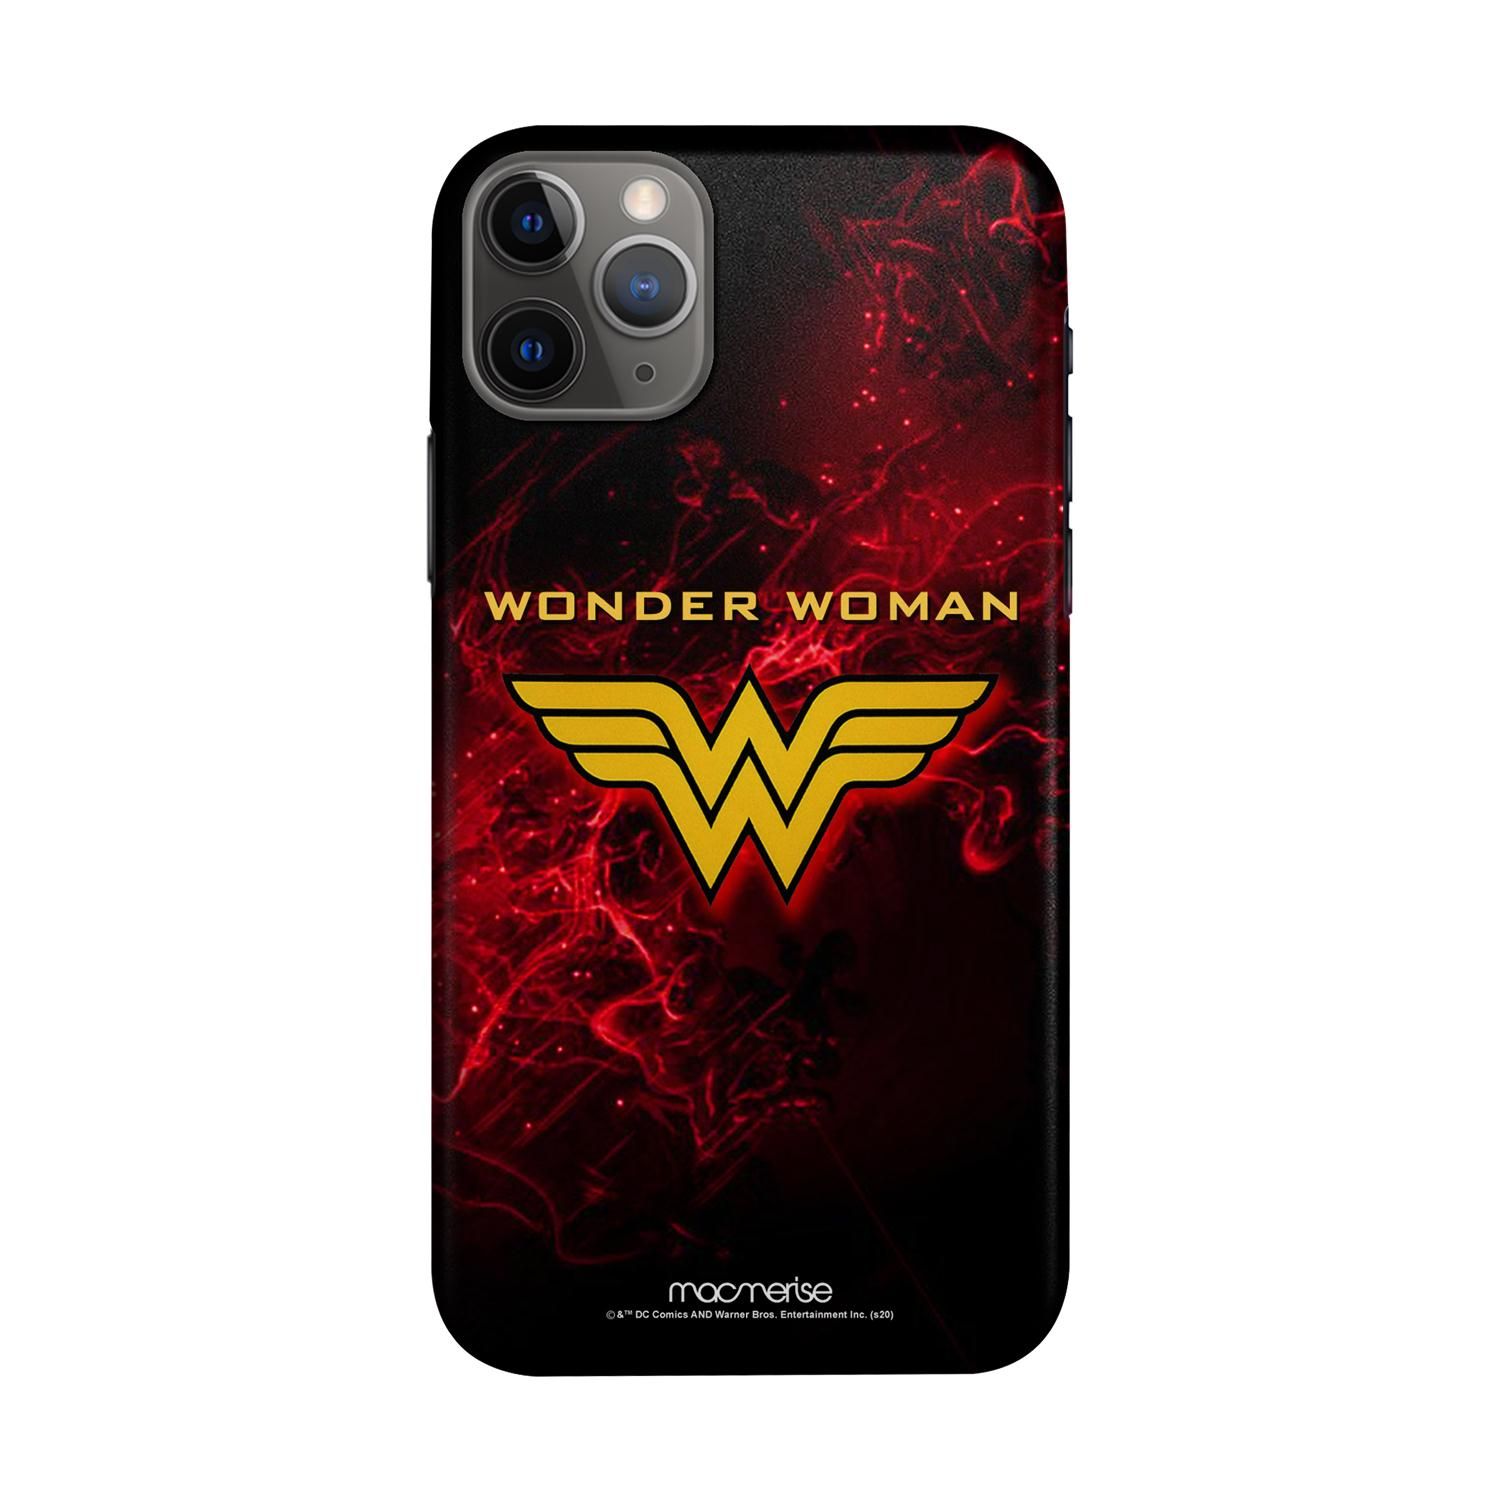 Buy Emblem Wonder Woman - Sleek Phone Case for iPhone 11 Pro Max Online